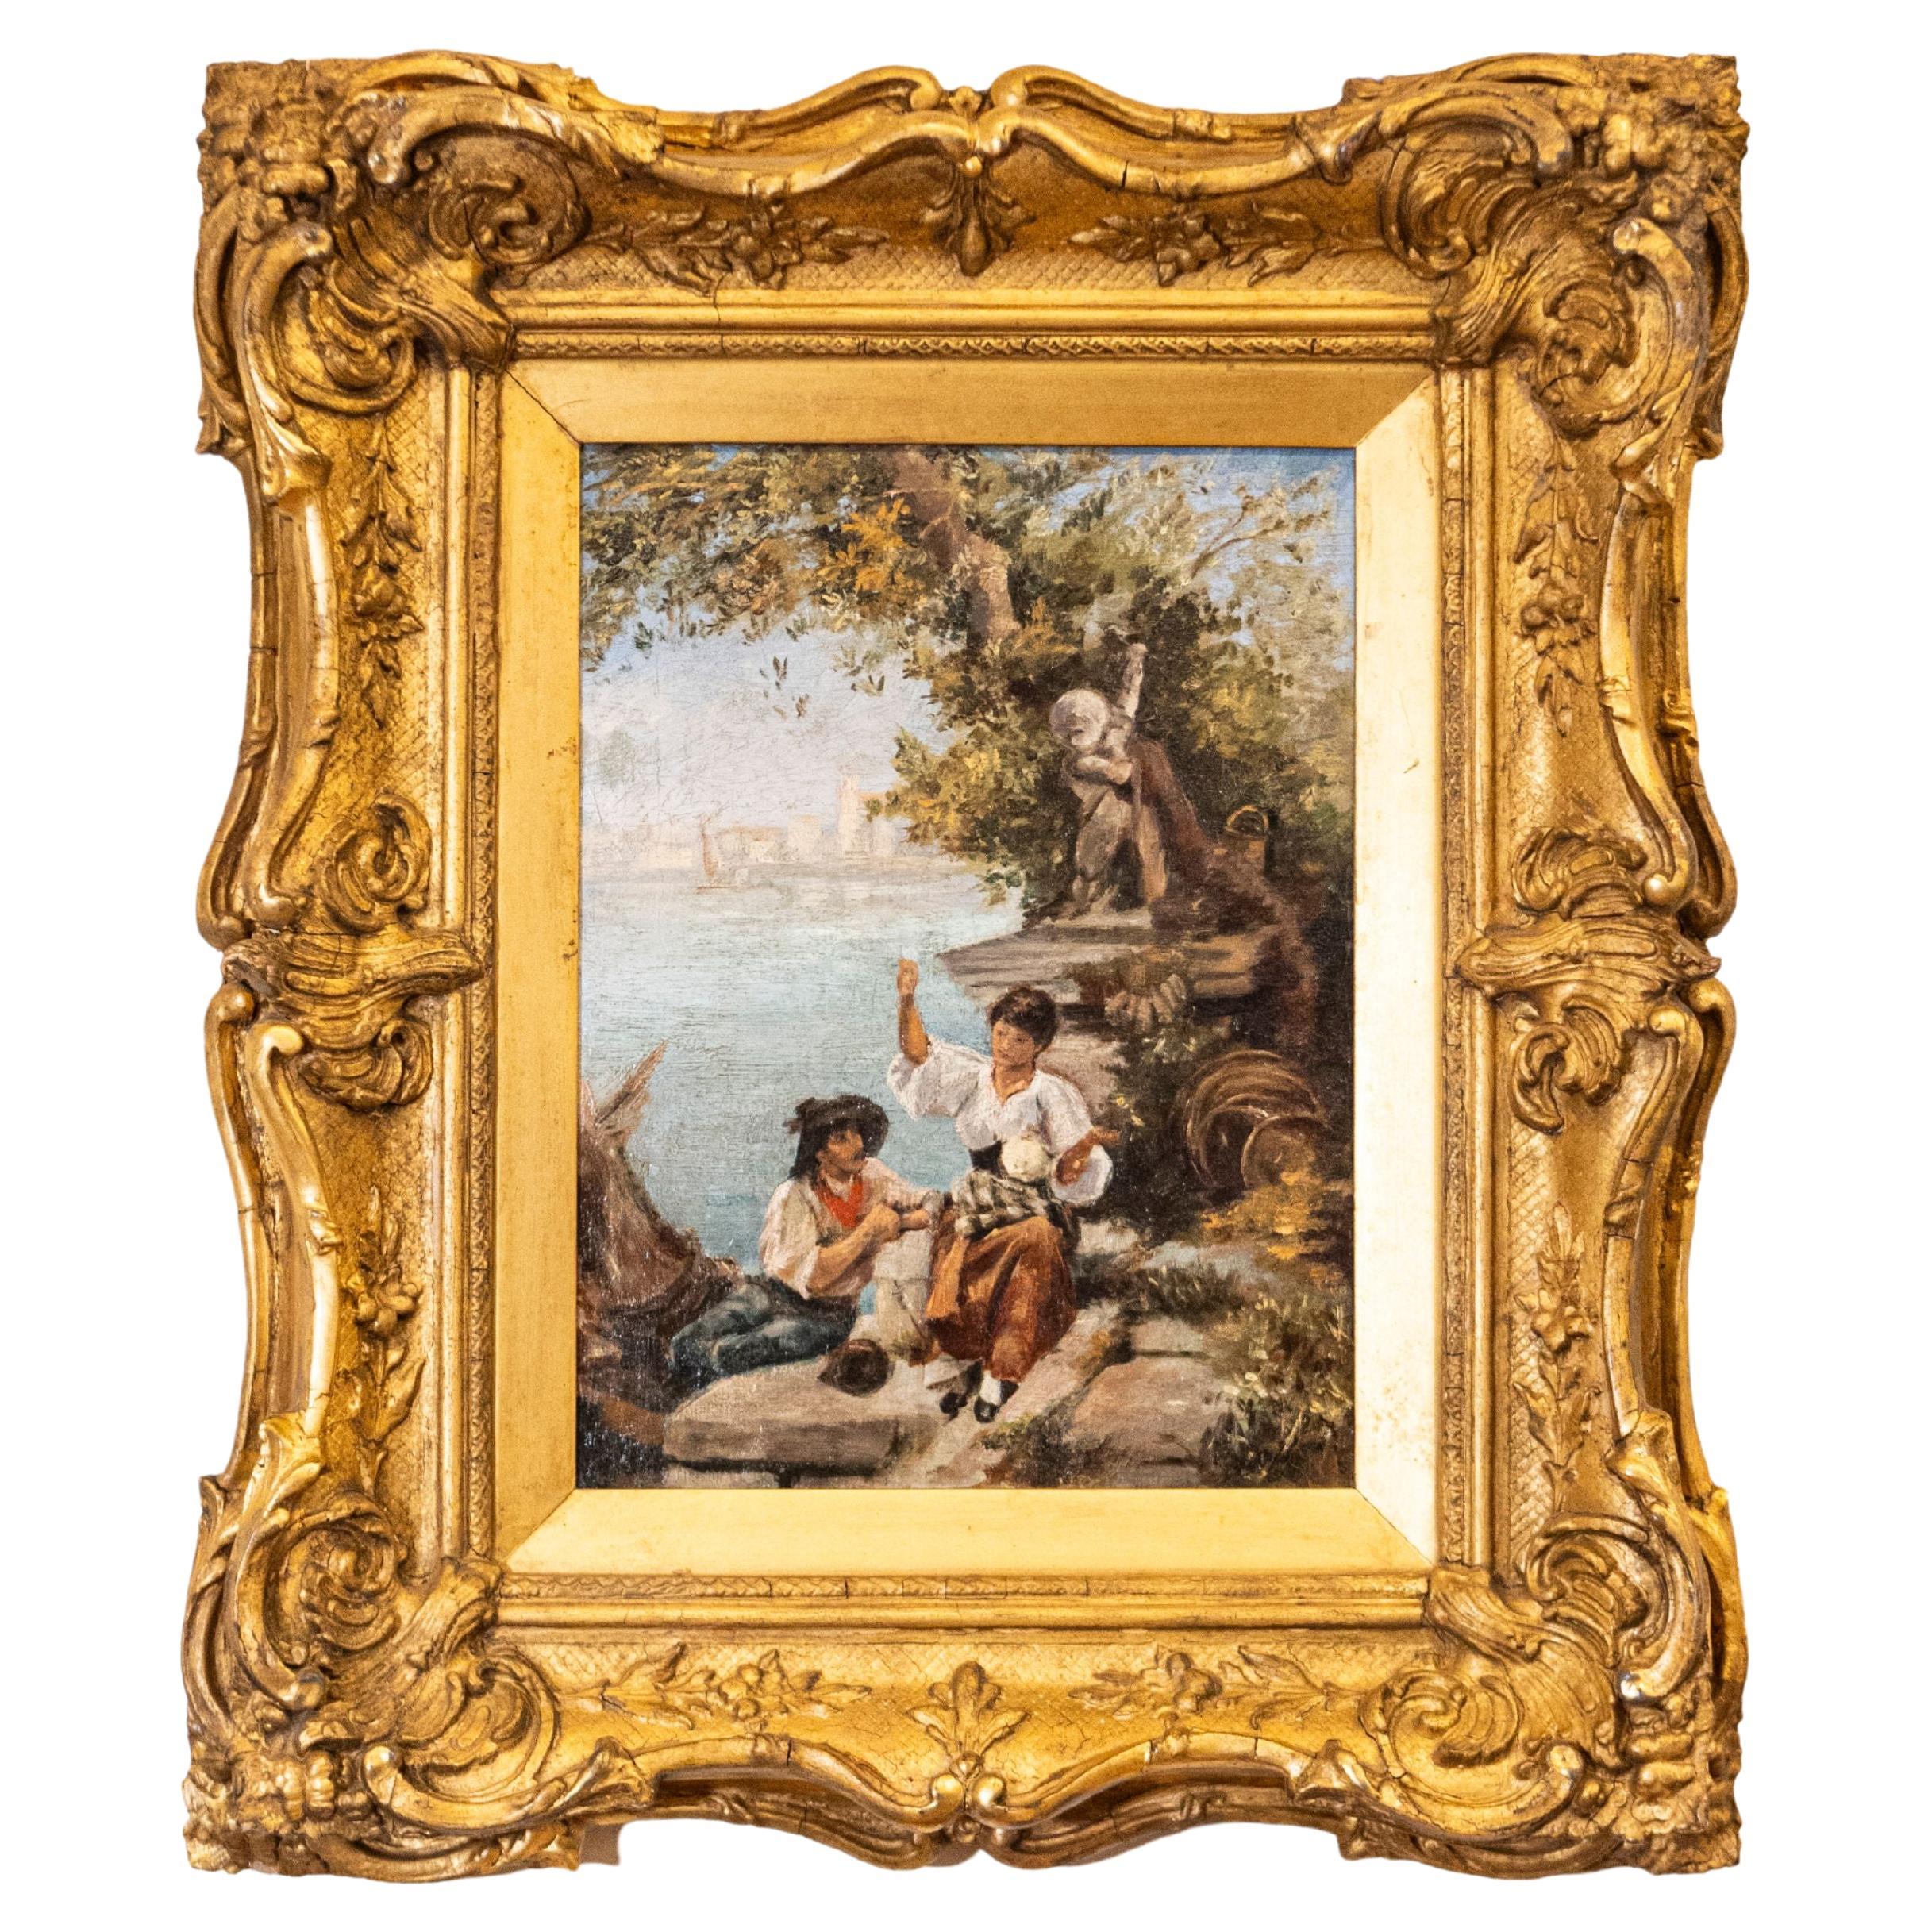 French, 19th Century Continental School Painting Depicting Venetian Lagoon Scene